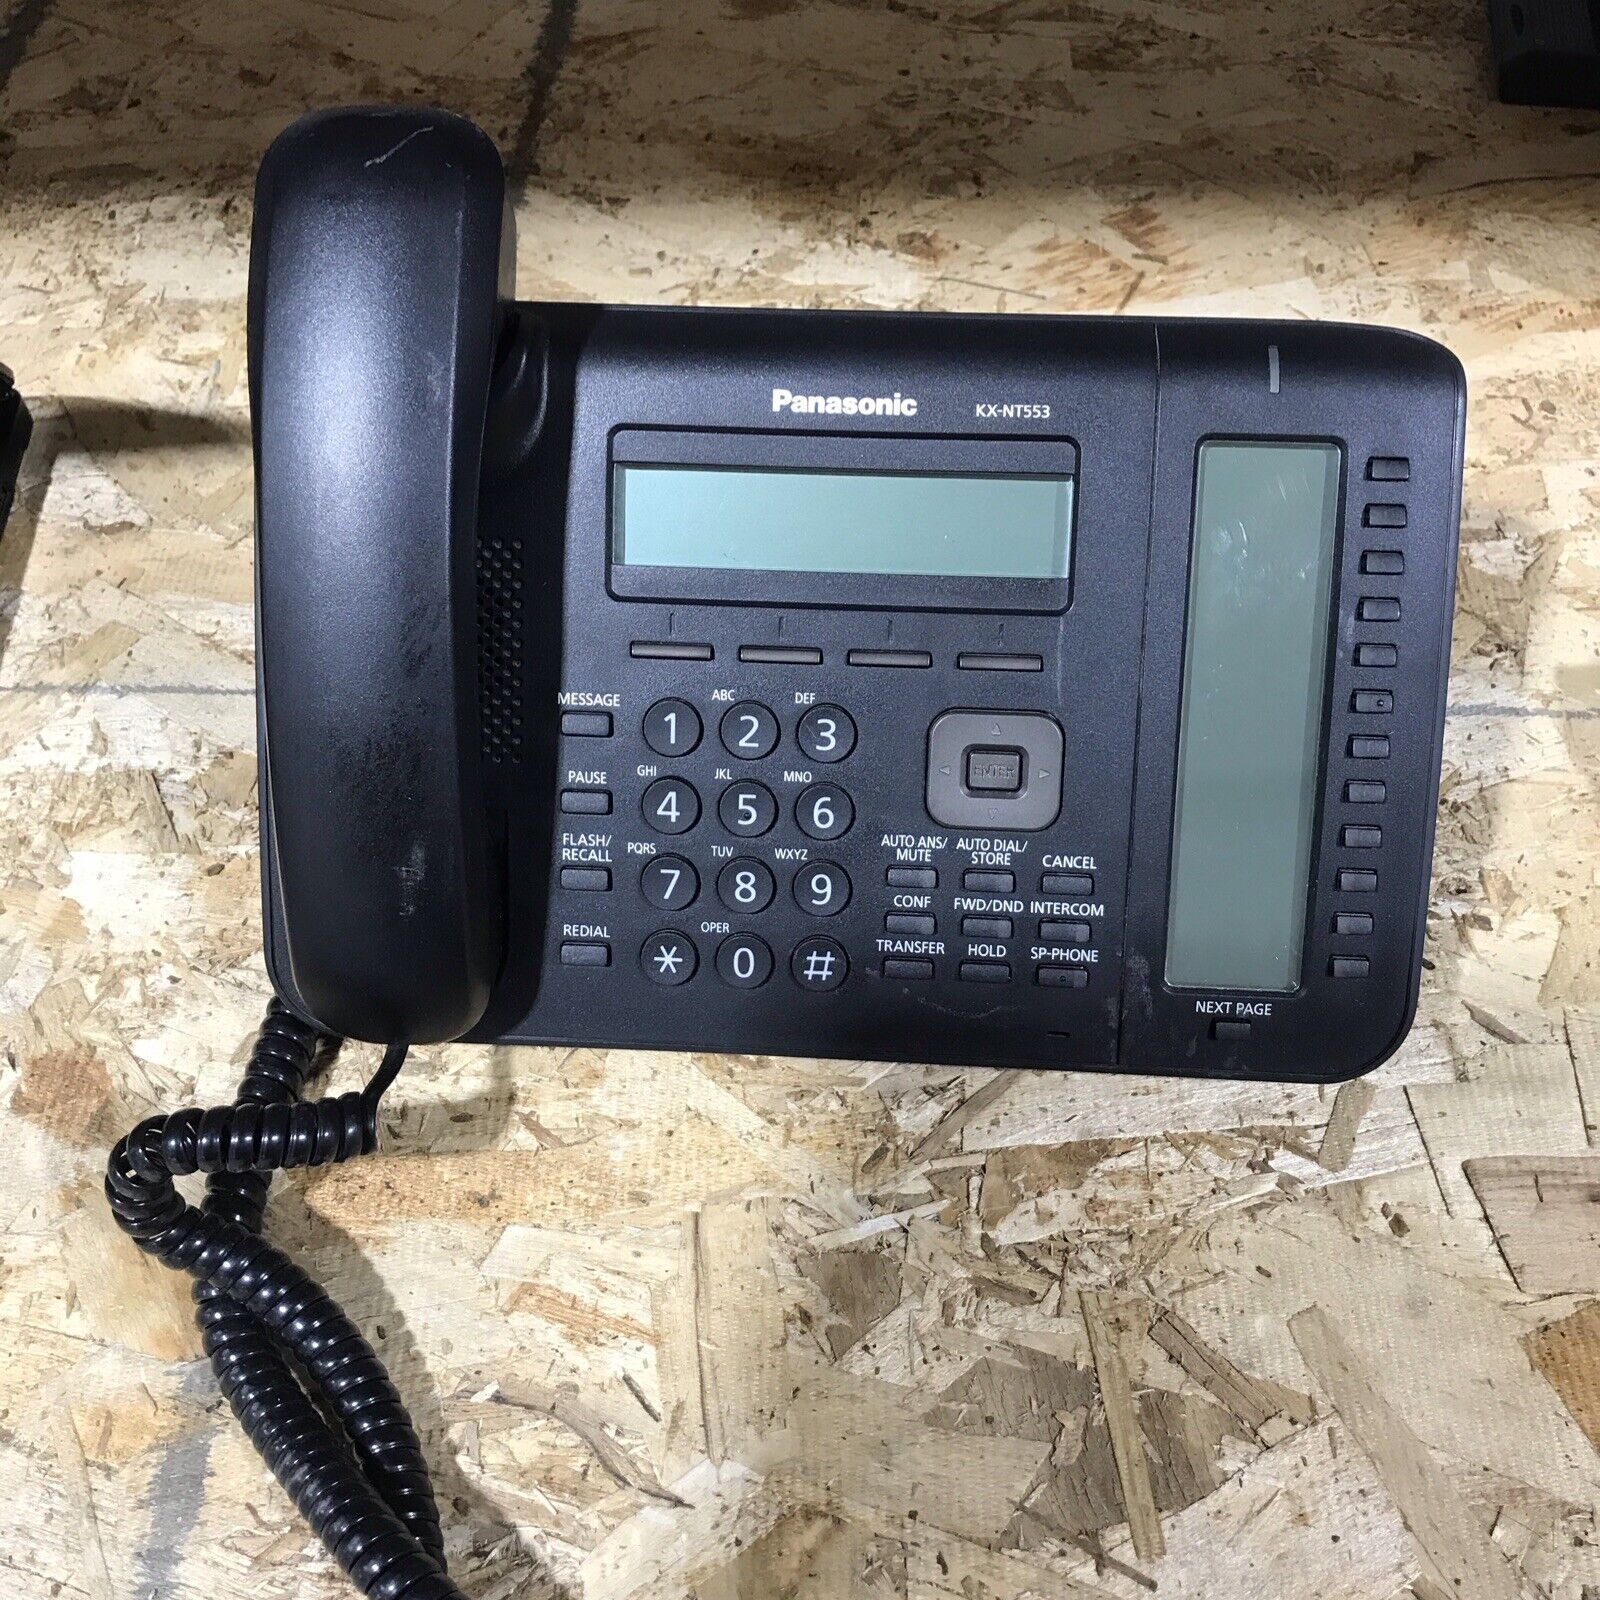 PANASONIC KX-NT553 Business IP Handset VoIP Office Phone